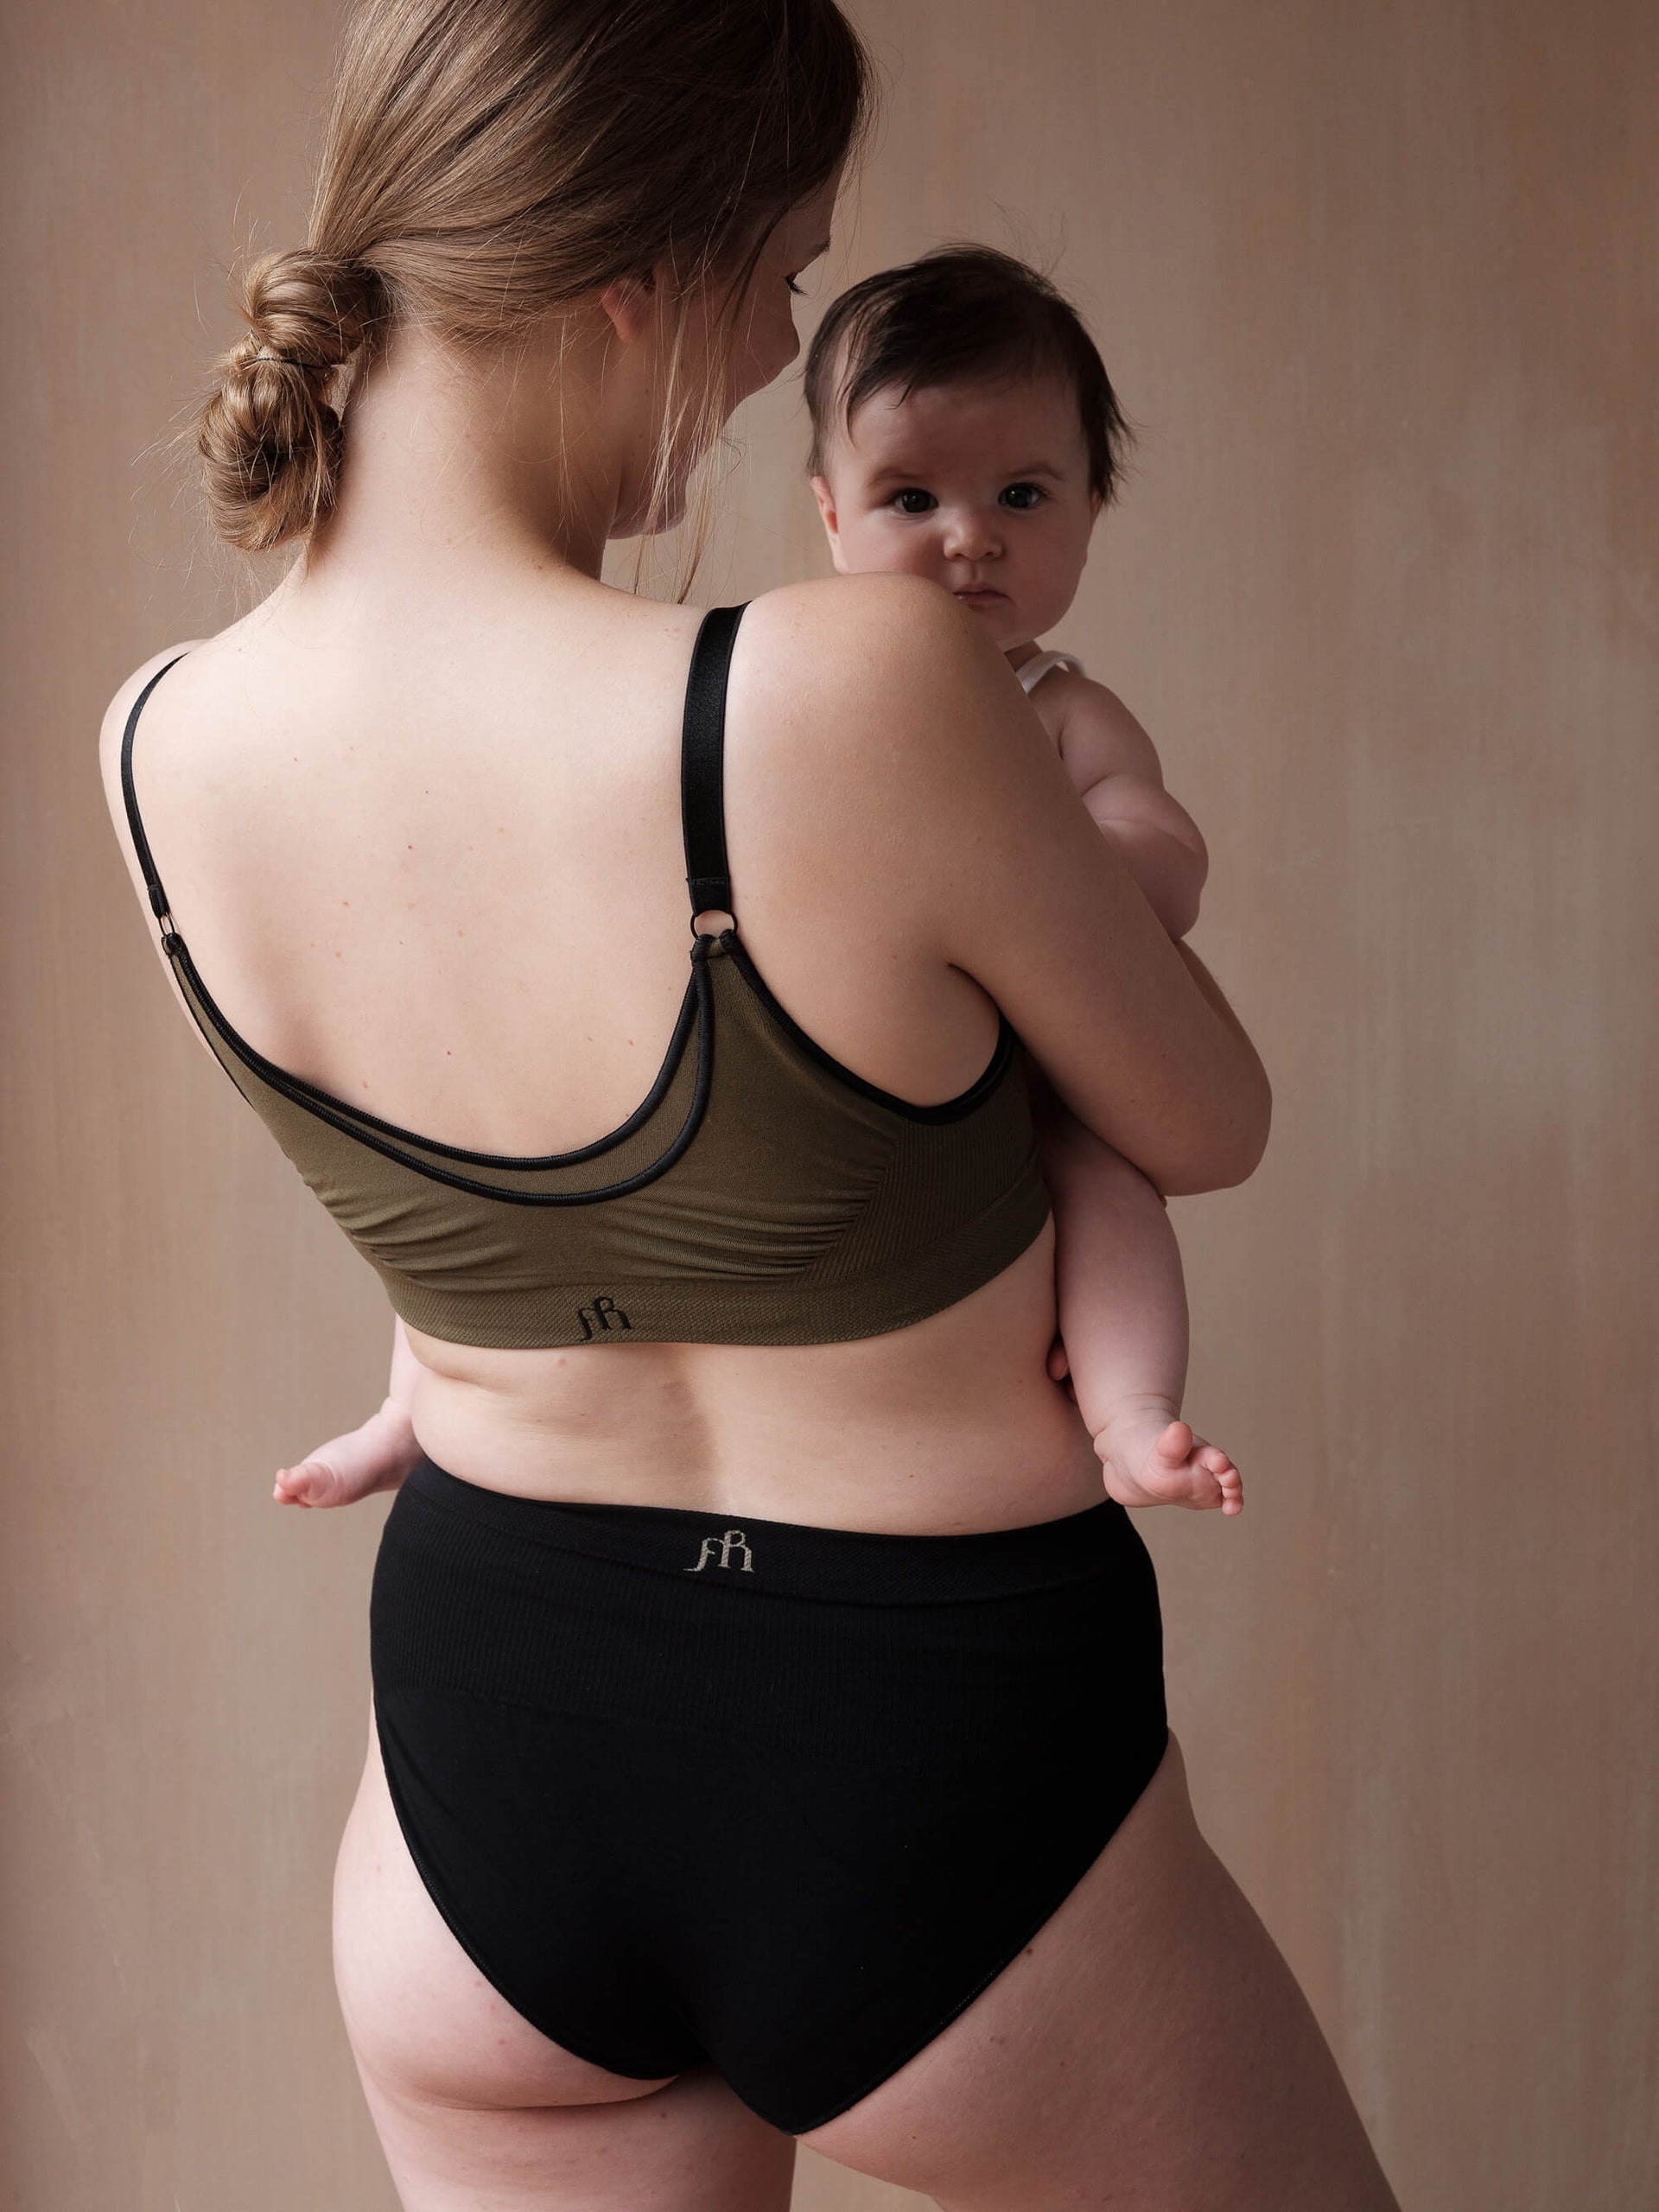 Jorgen House Dark olive green maternity breastfeeding bra and black briefs on. female body holding her baby